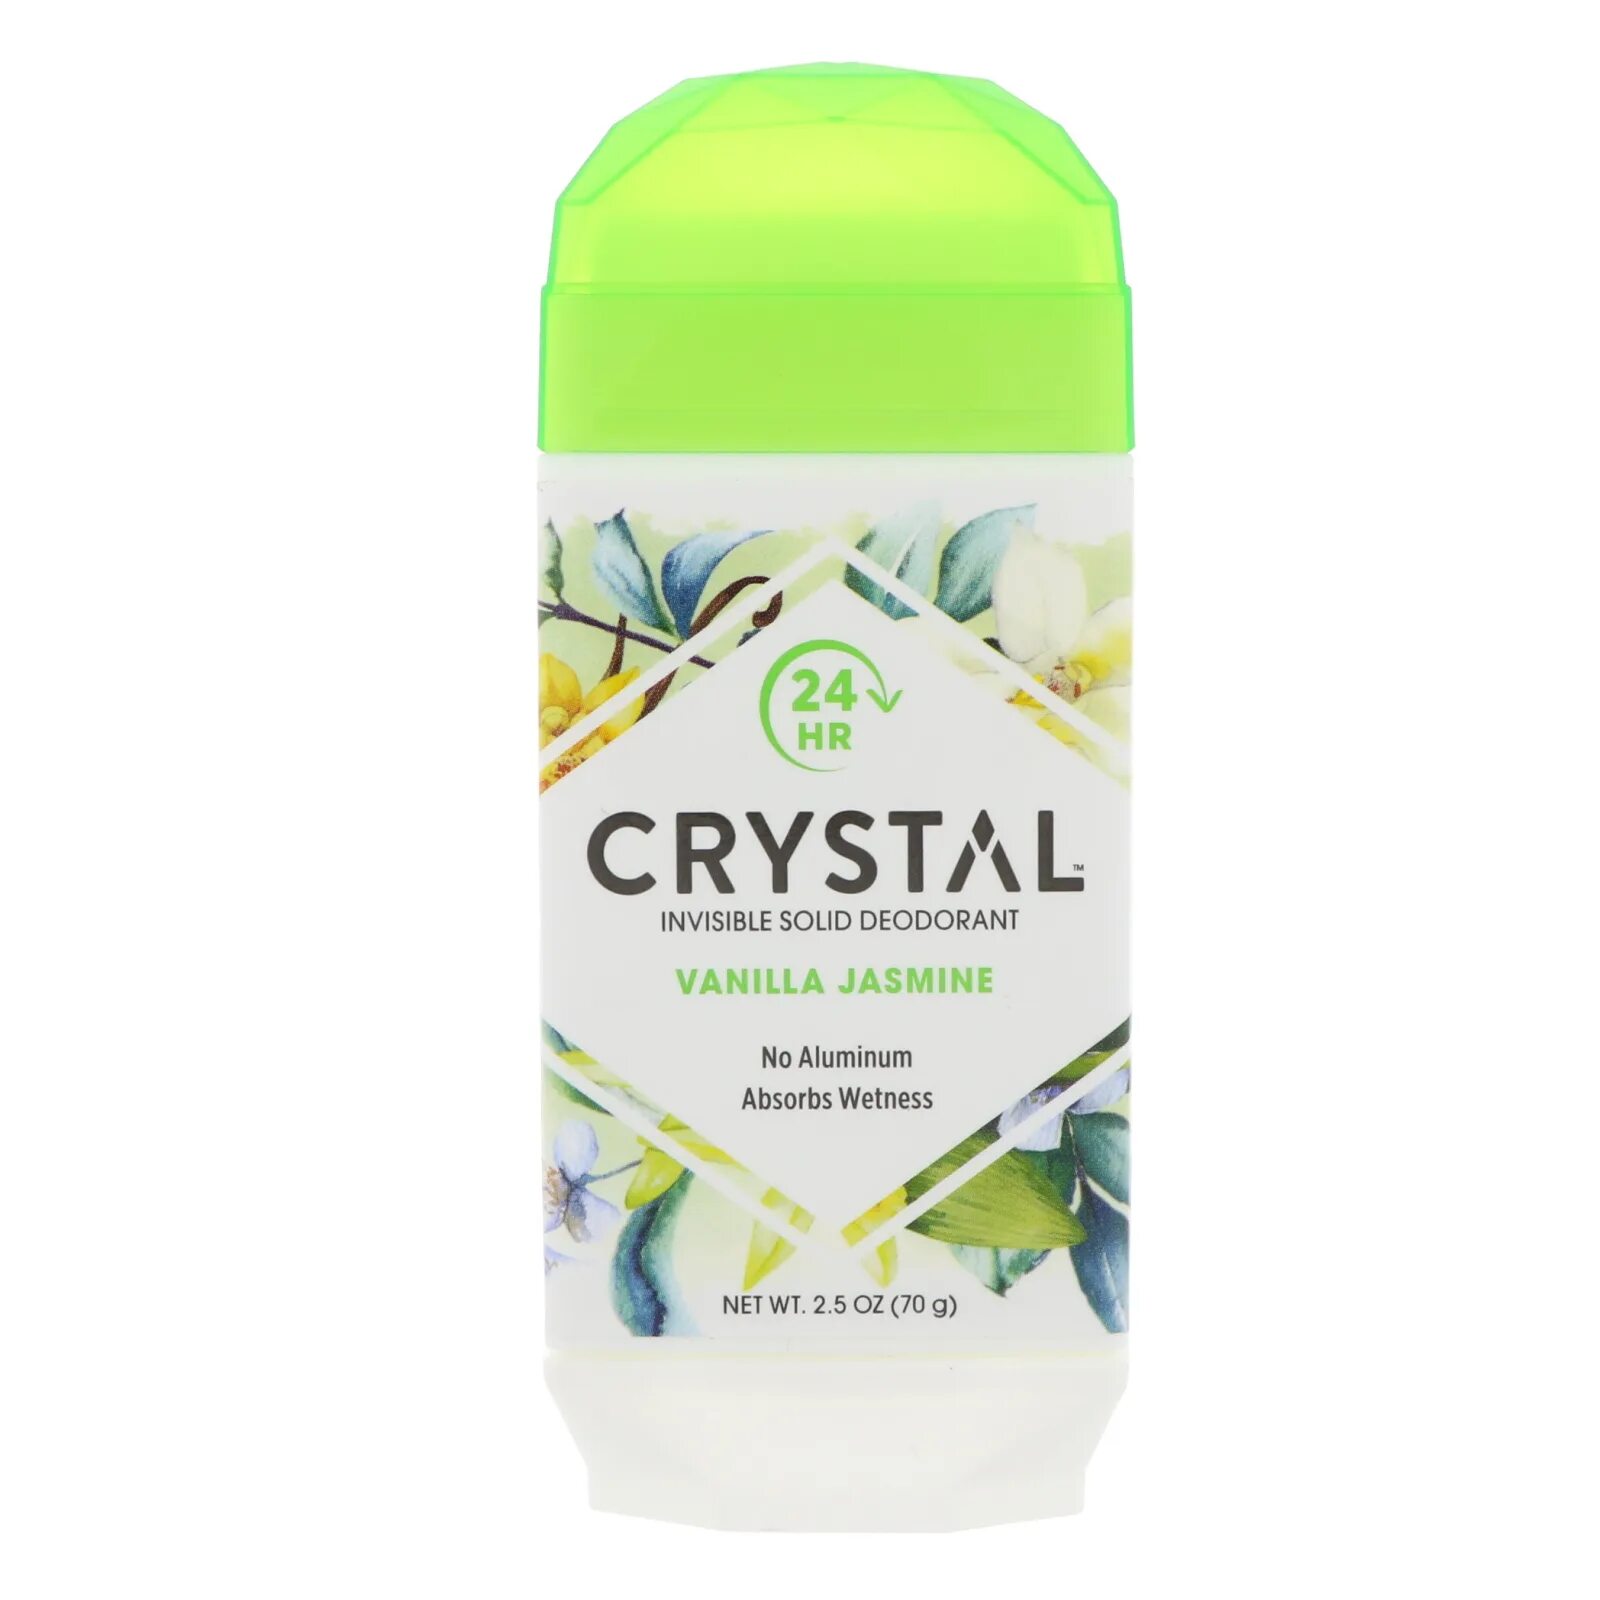 Дезодорант Crystal body Deodorant. Дезодорант Crystal Mineral-enriched. Кристал дезодорант Кристалл. Secret Jasmine дезодорант. Твердый гель для душа